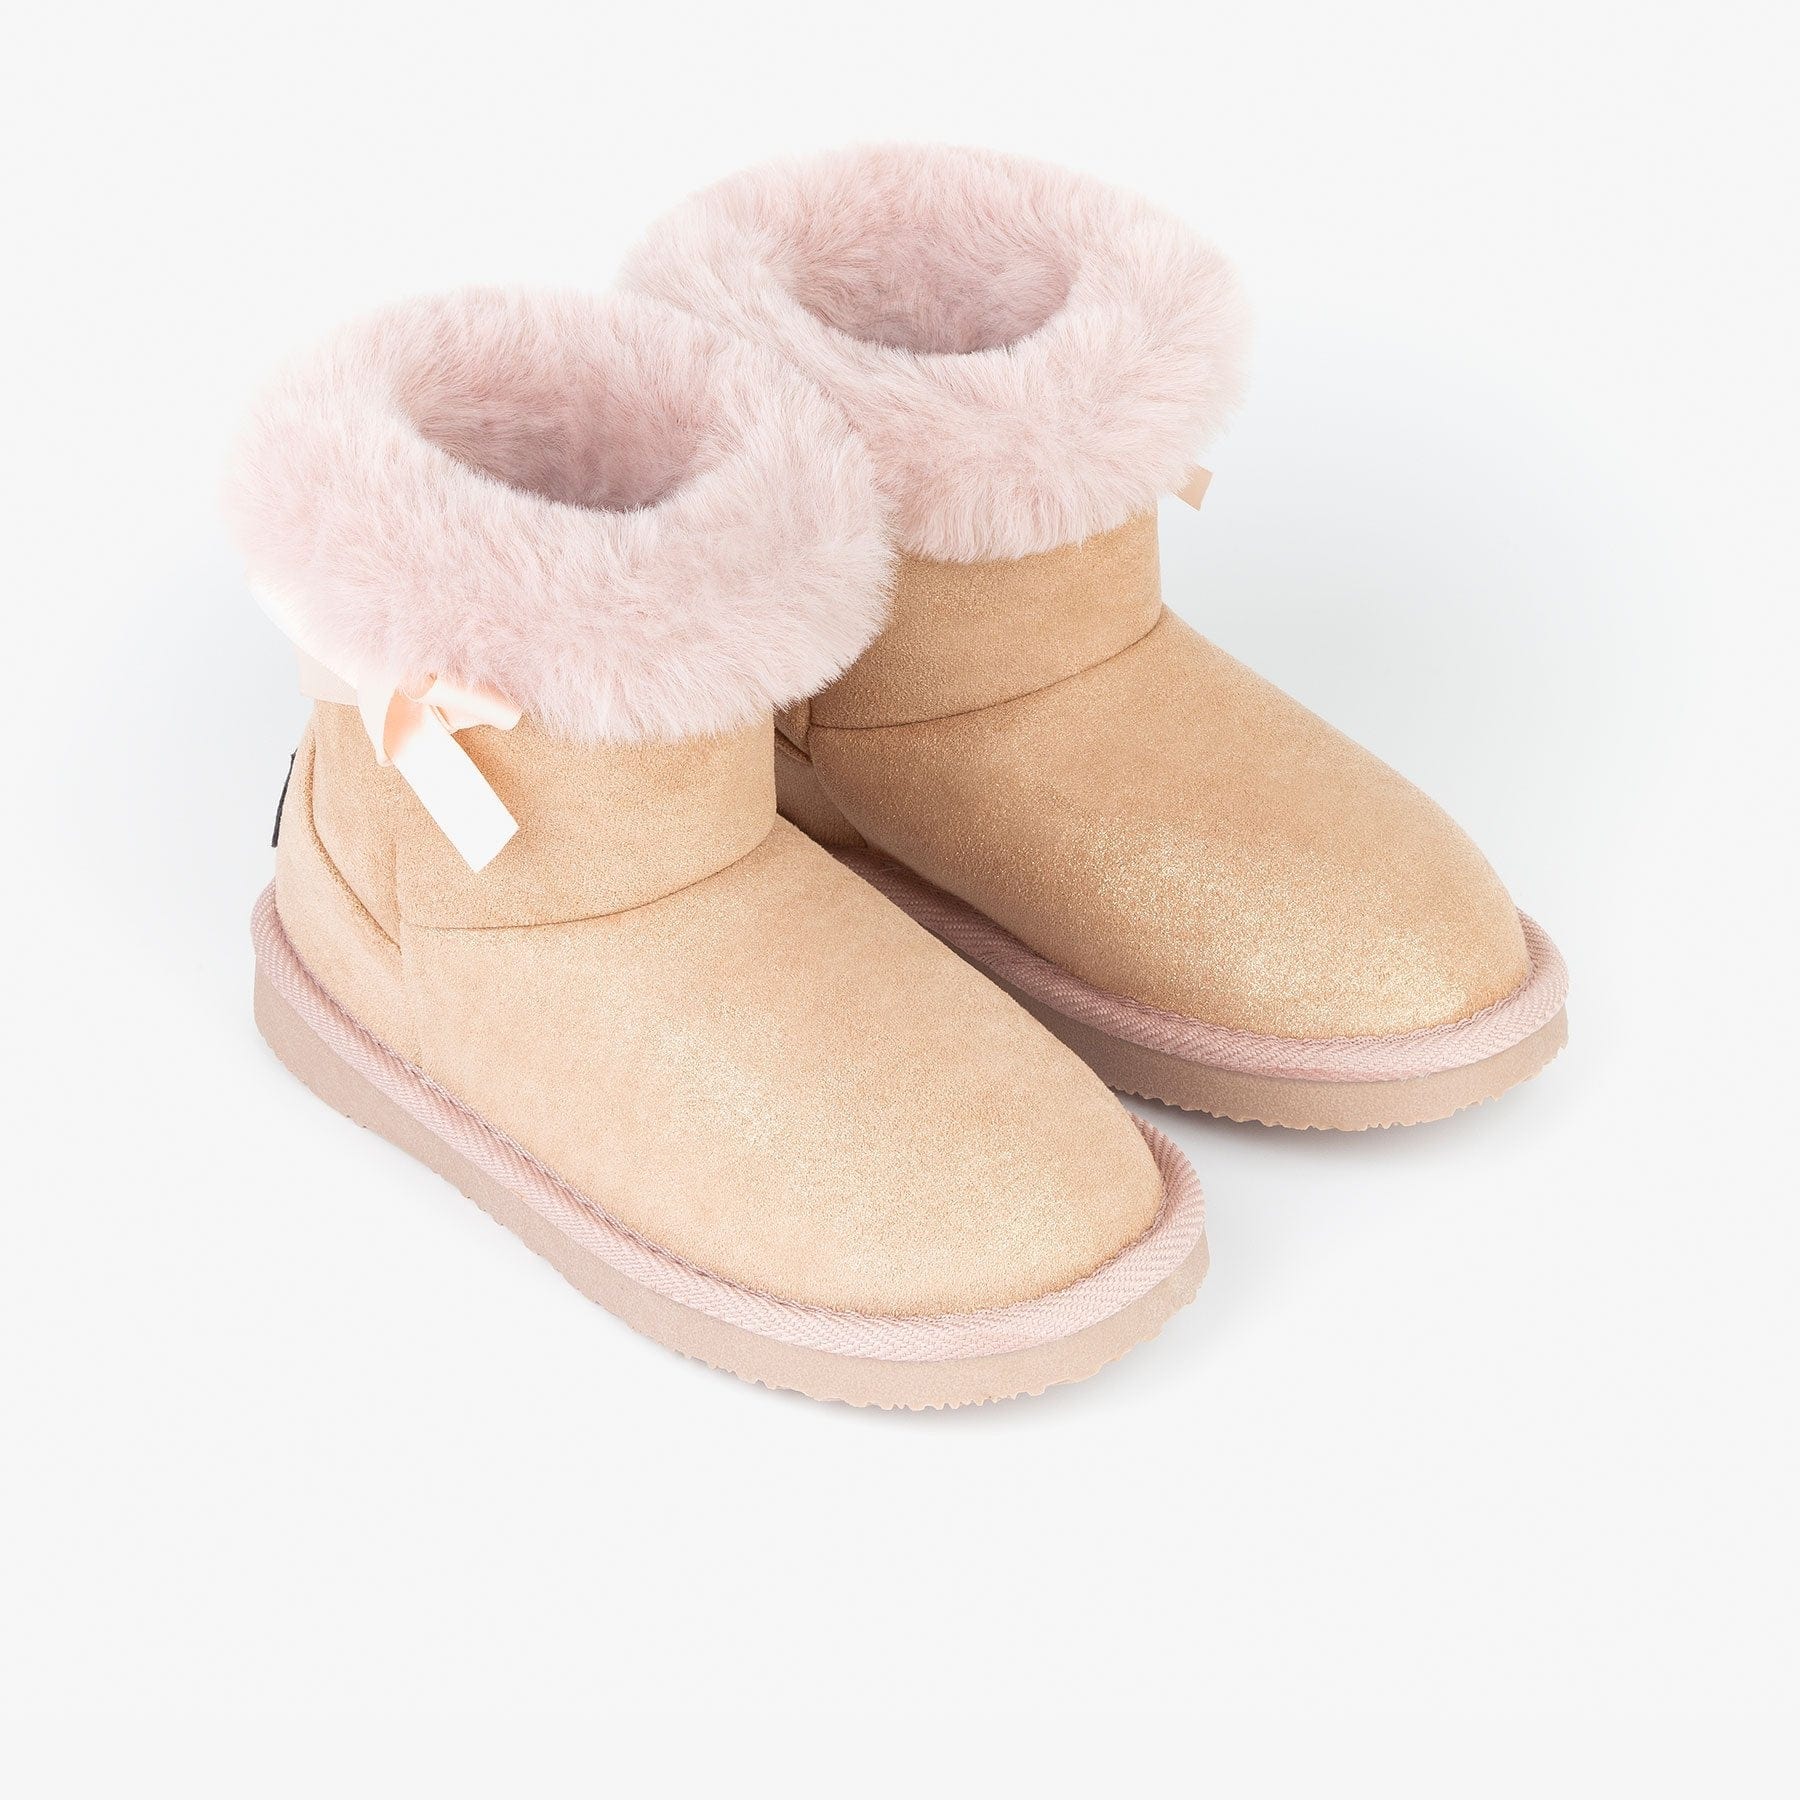 FRESAS CON NATA Shoes Girl's Pink Fur Australian Boots